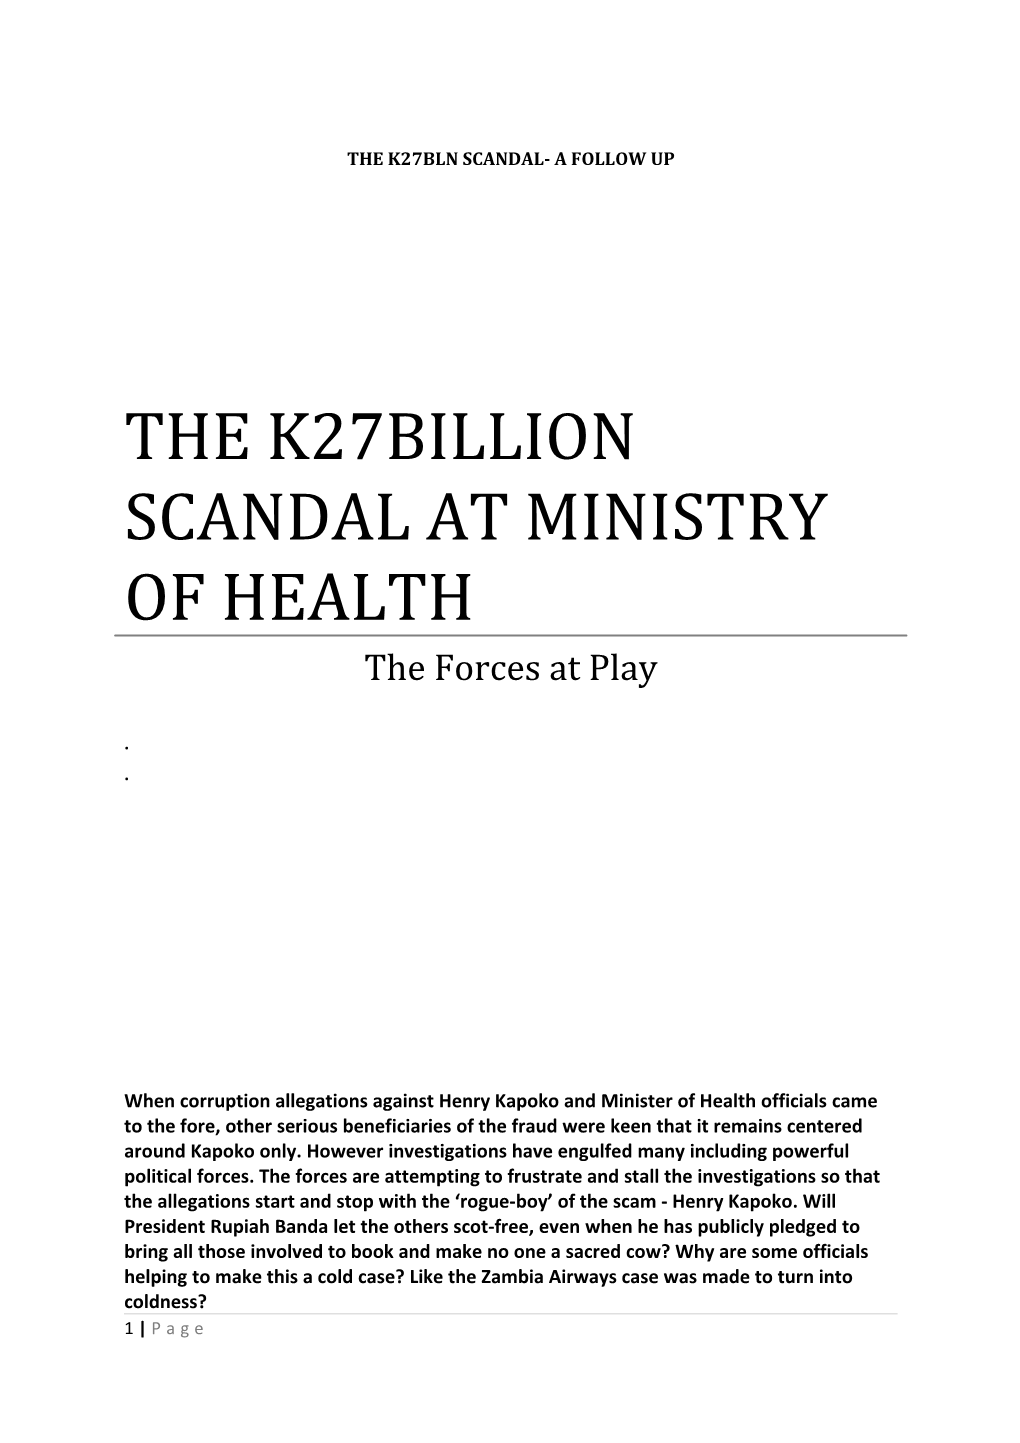 The K27billion Scandal at Ministry of Health